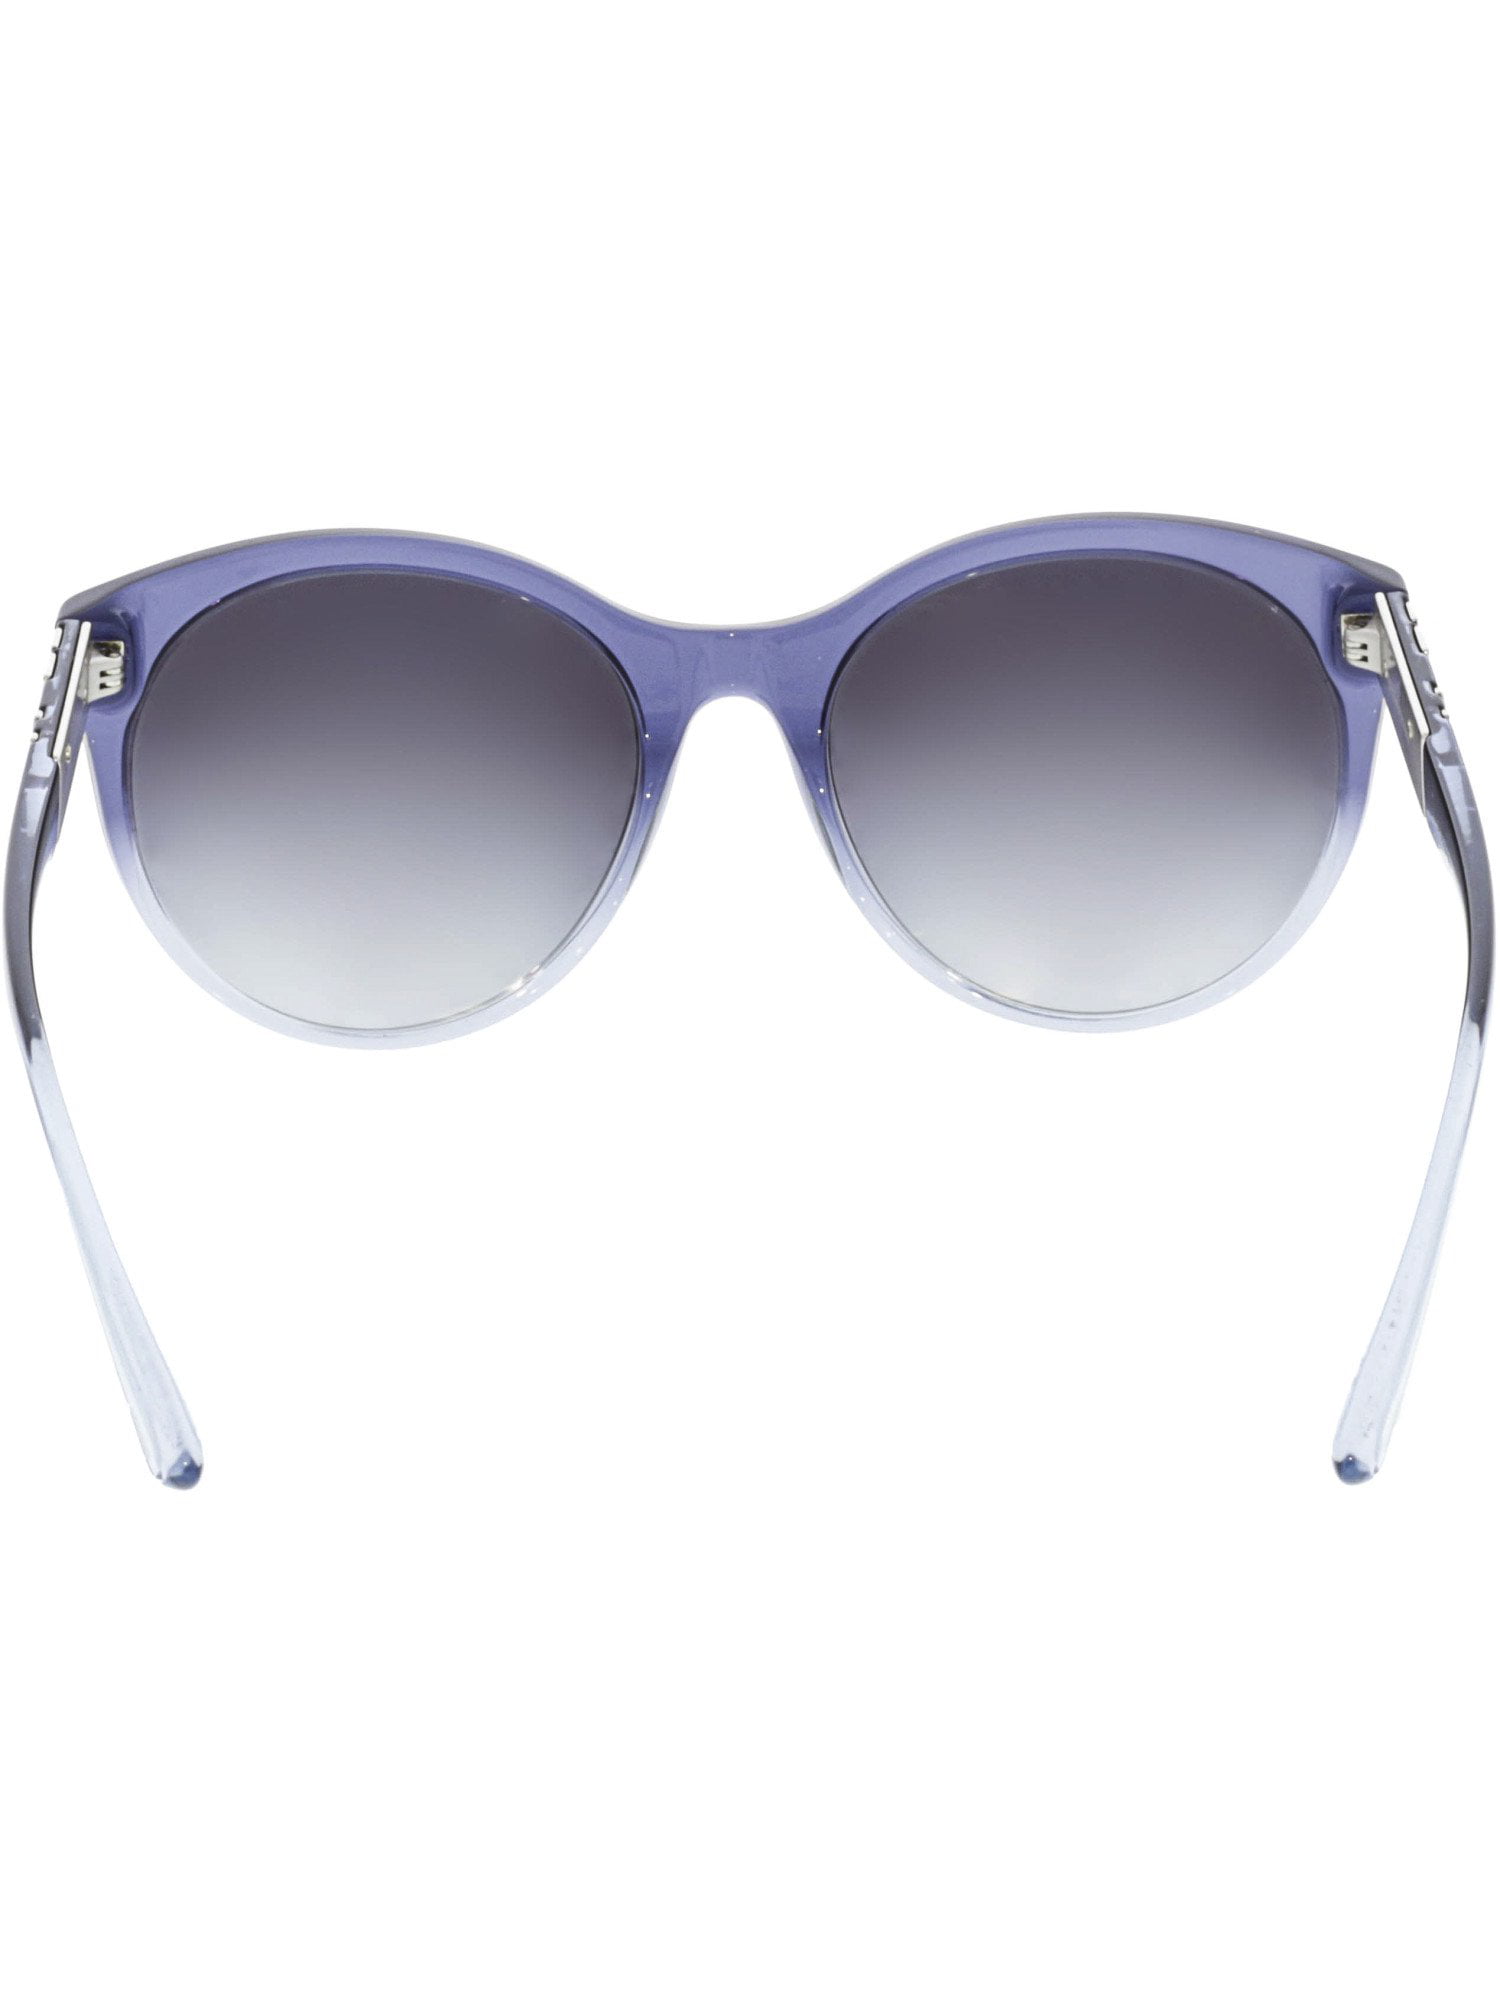 burberry glasses womens blue